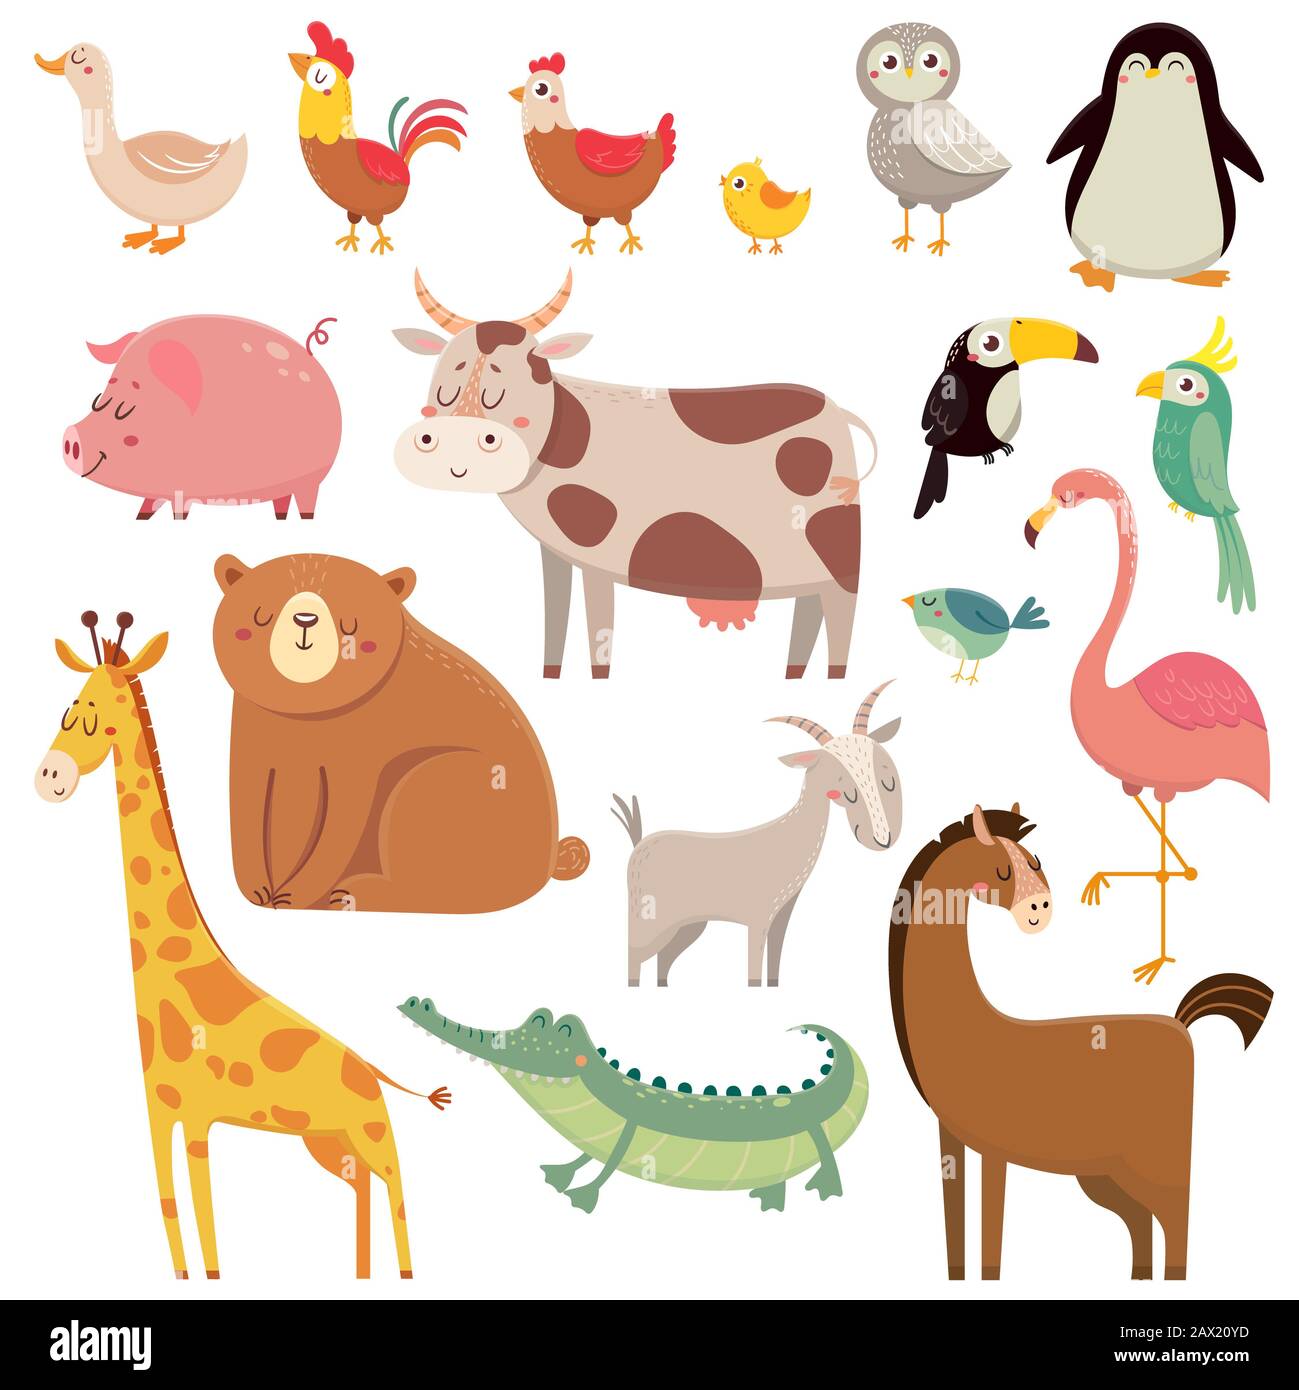 Baby cartoons wild bear, giraffe, crocodile, bird and domestic animals. Cute cartoon animal kids vector illustration set Stock Photo